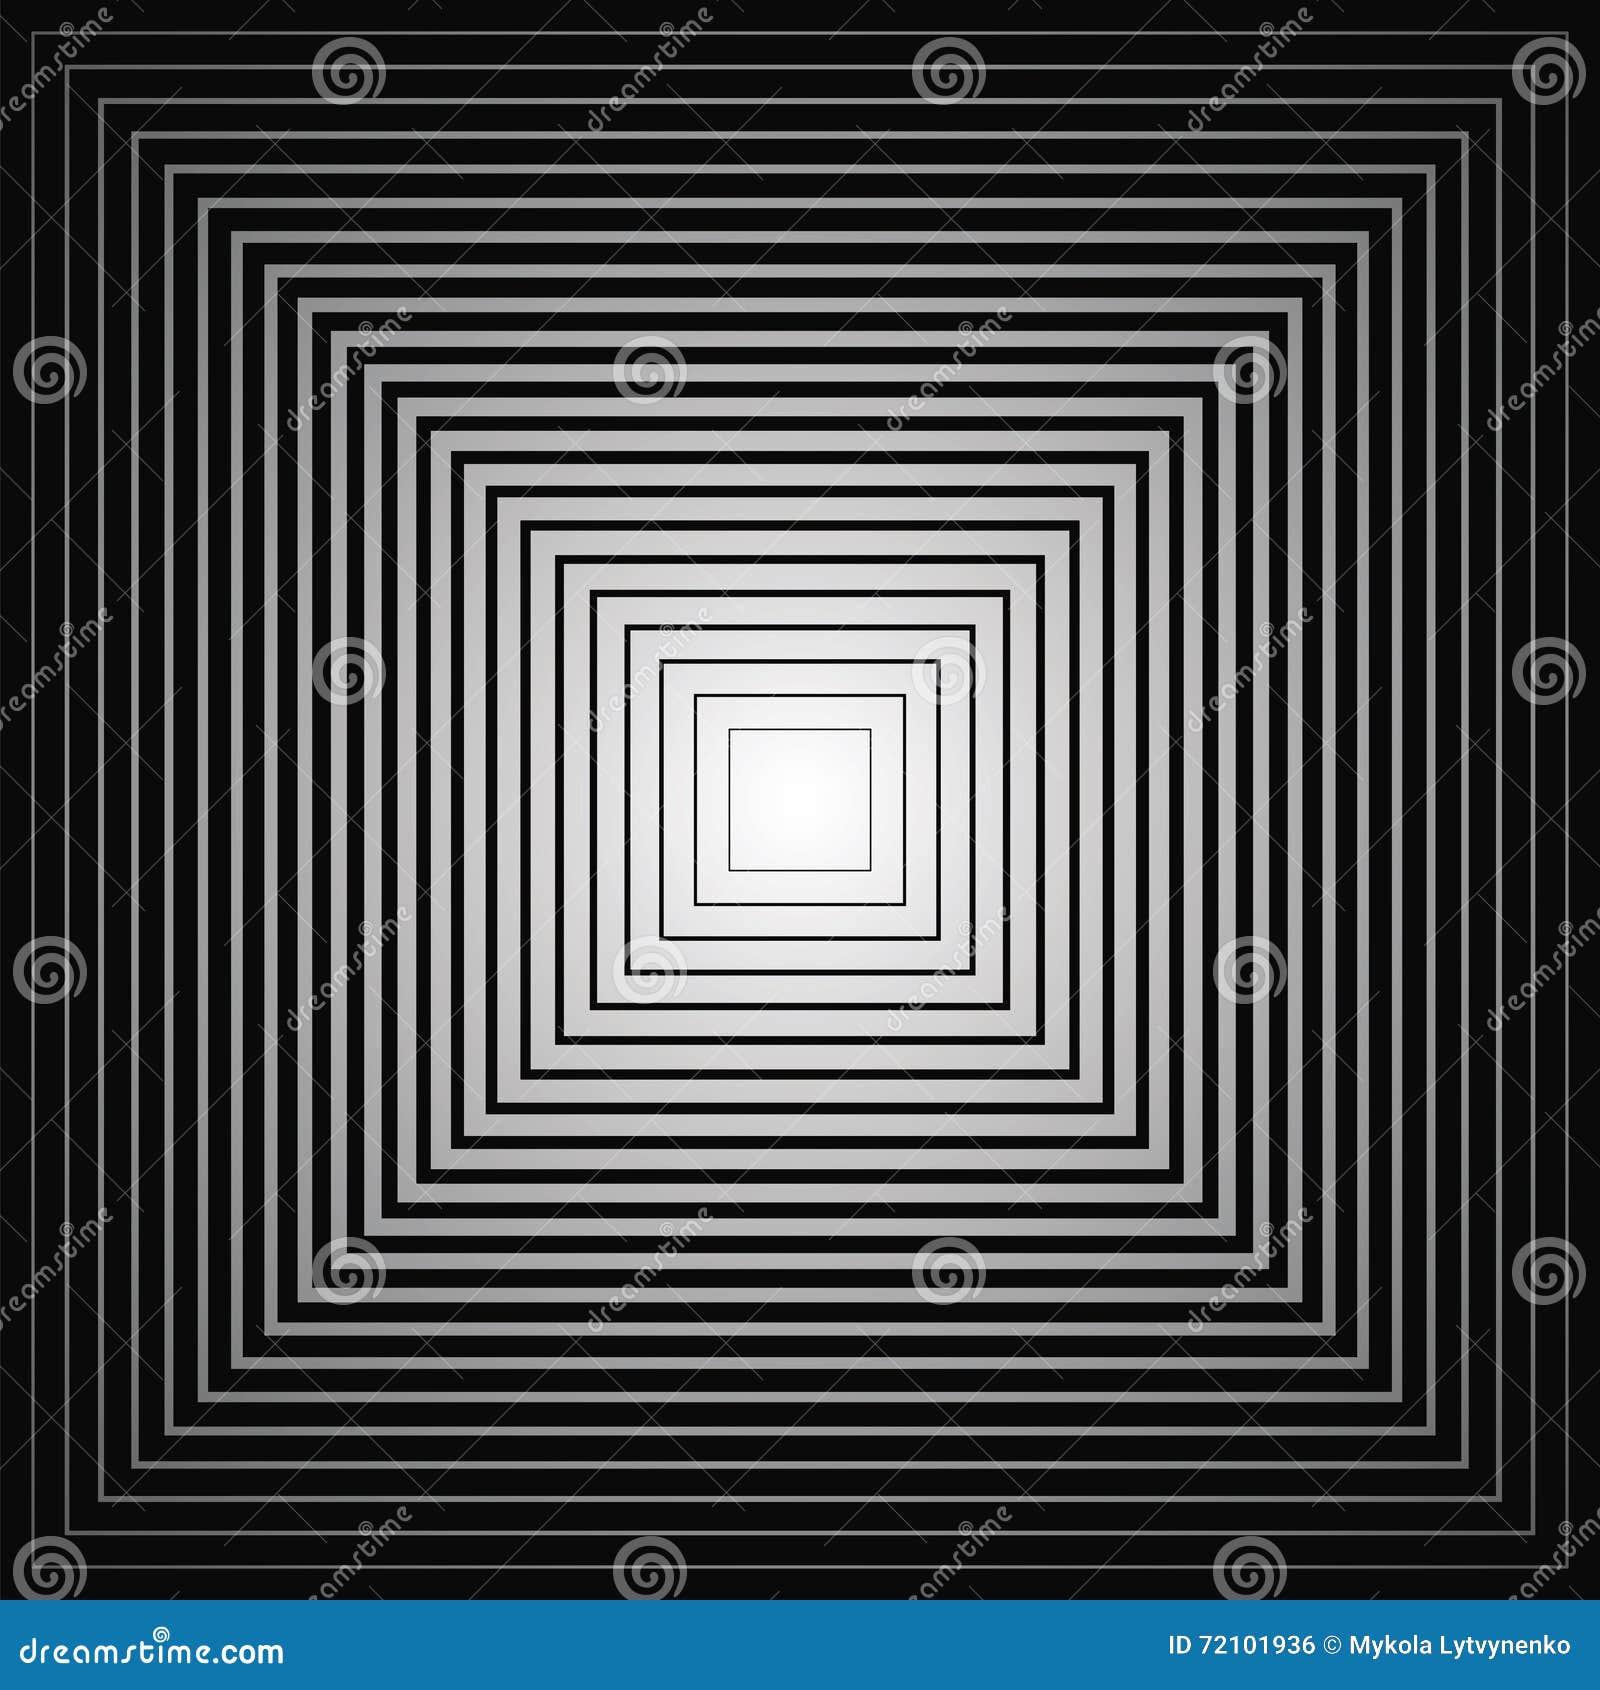 Diminishing squares stock vector. Illustration of spiral - 72101936